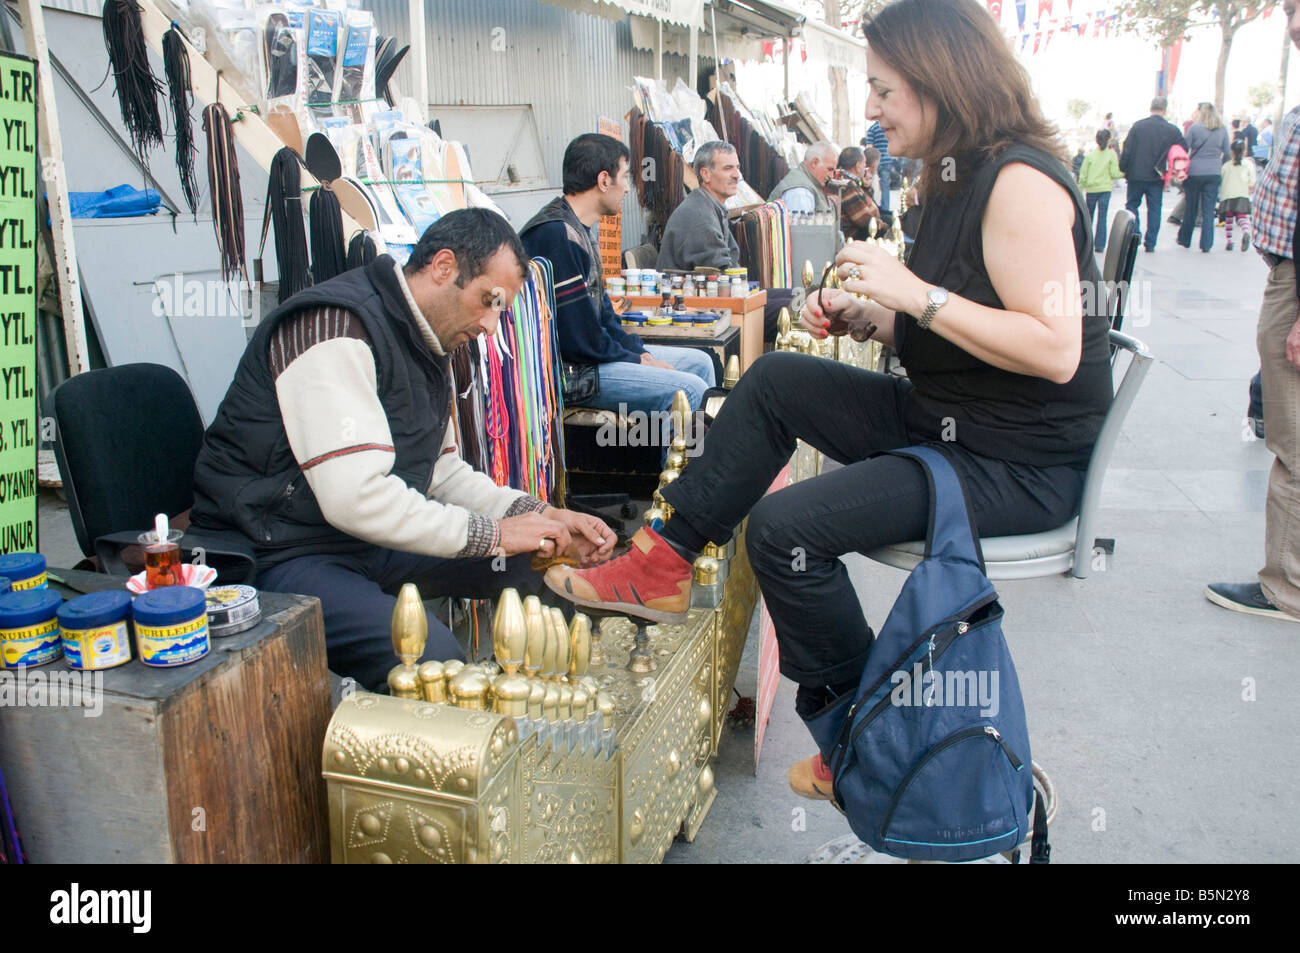 Turkey Istanbul Shoeshine stand female client having her shoes polished Stock Photo